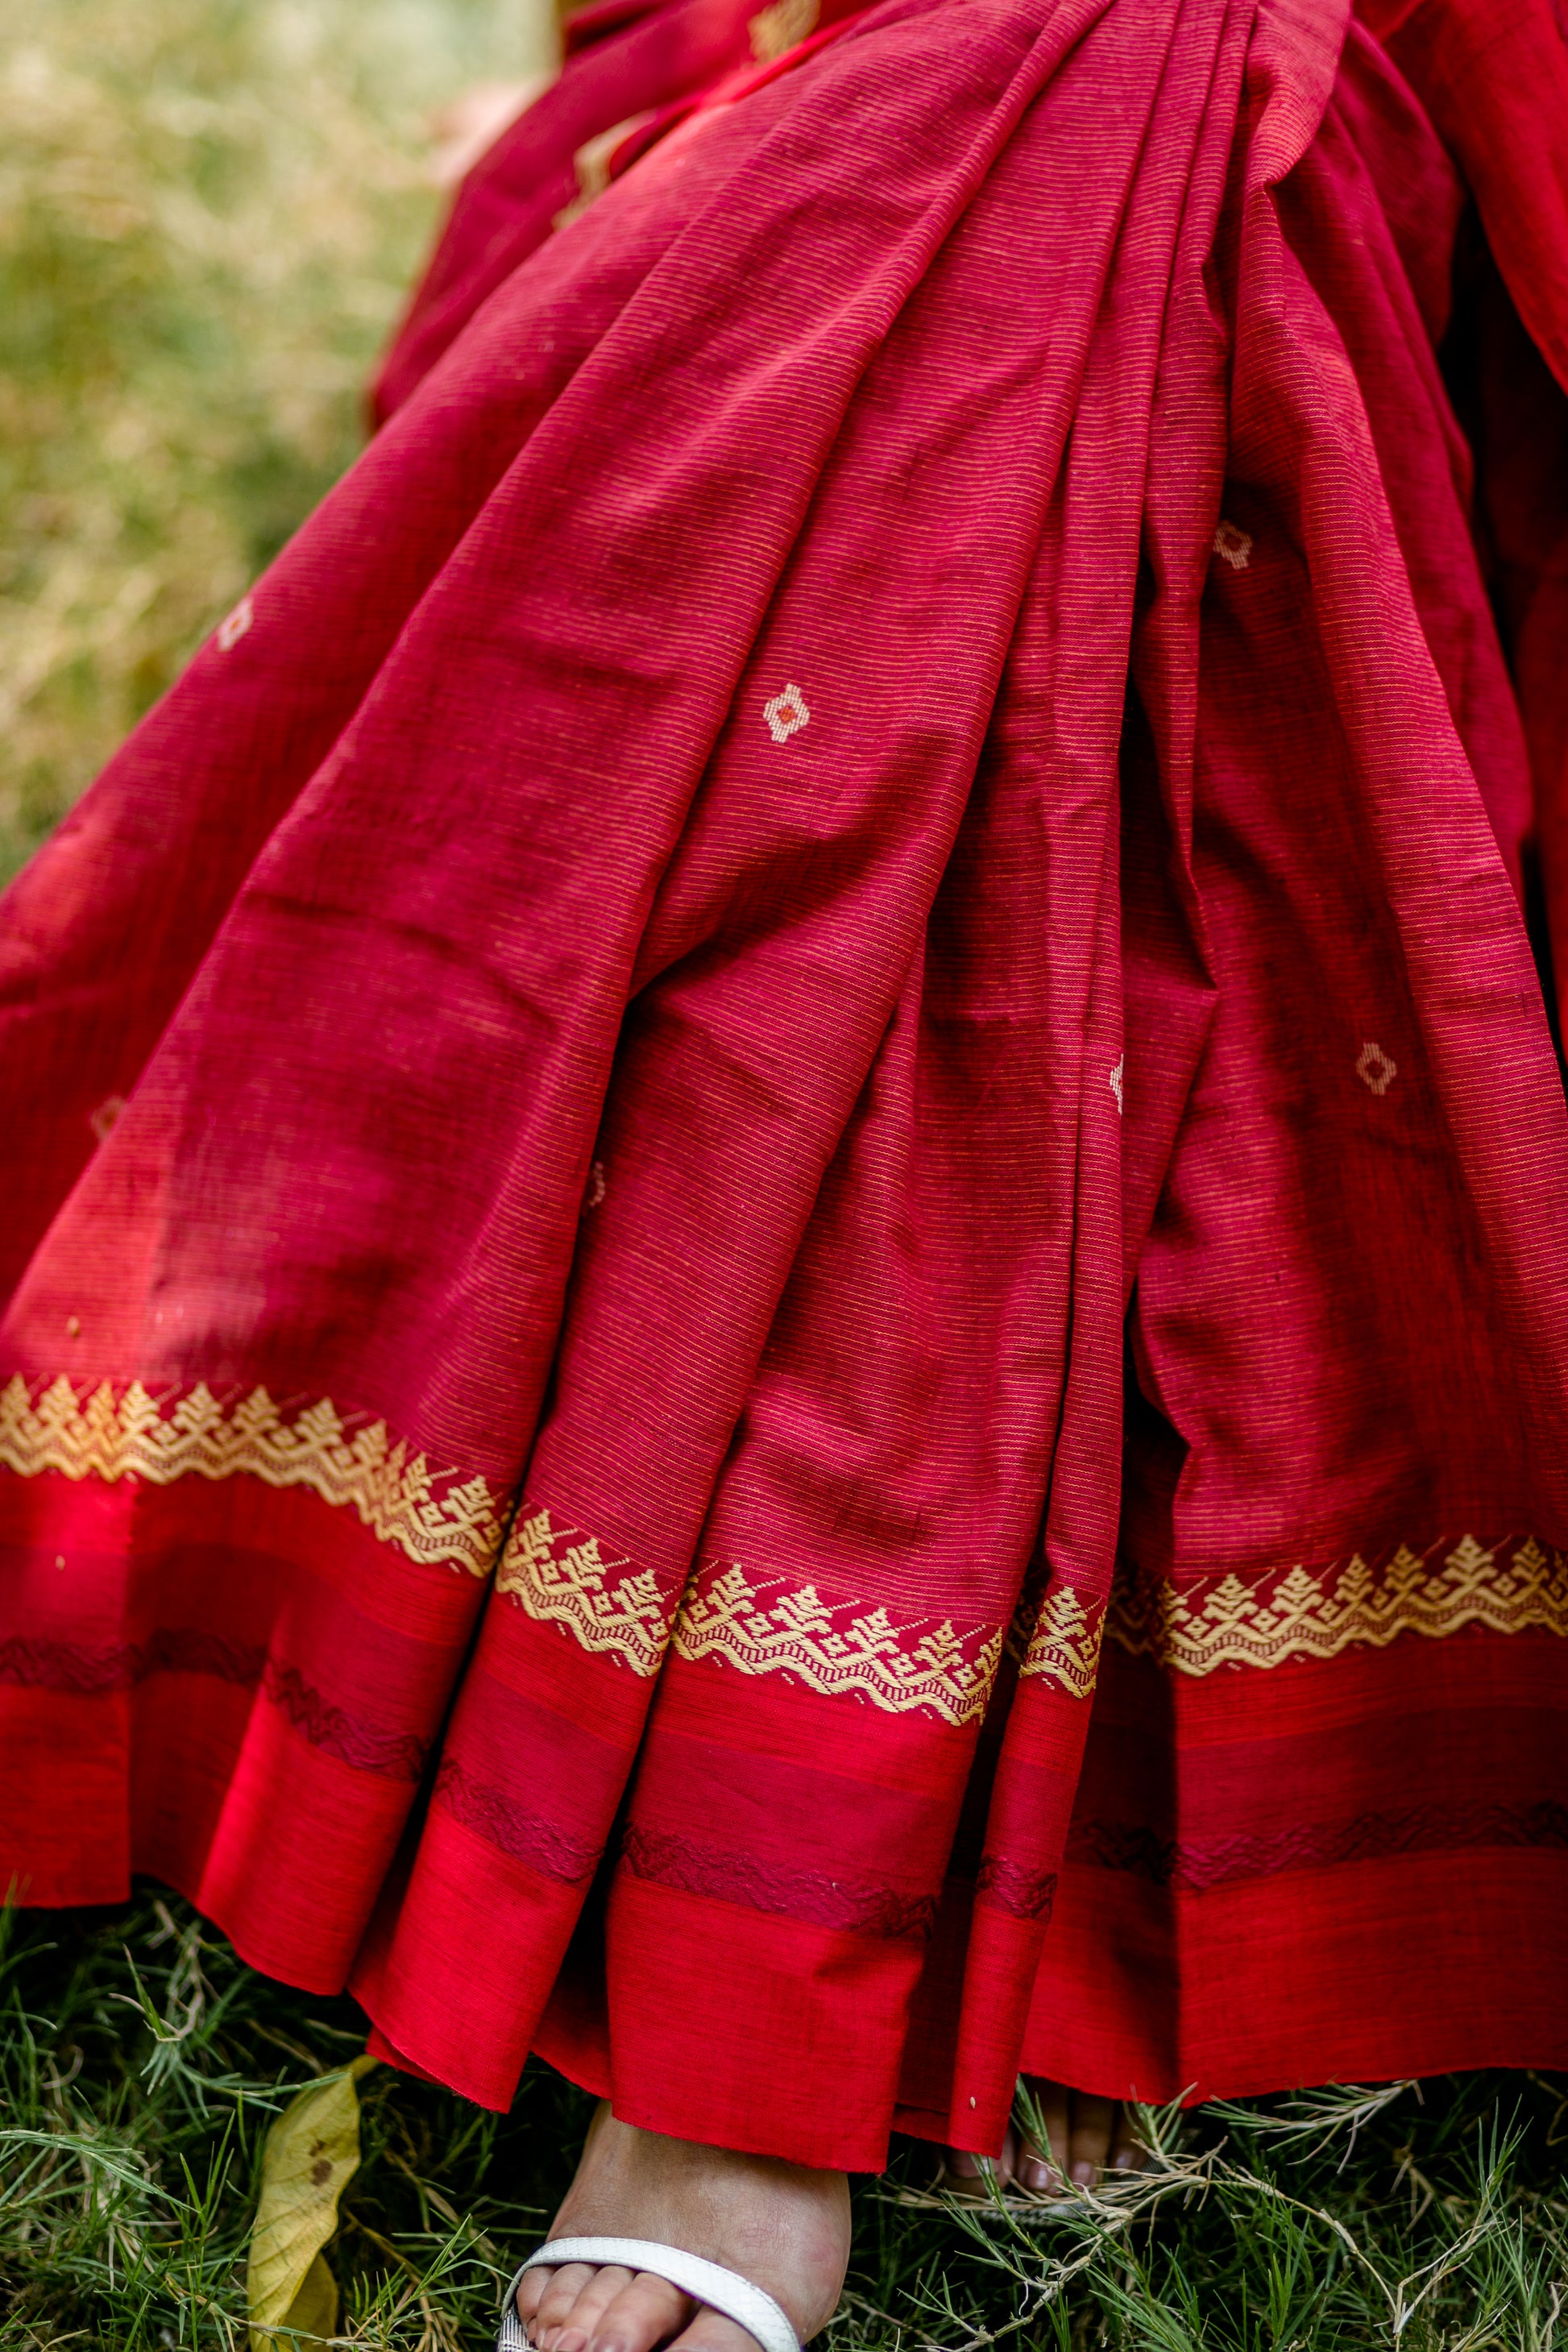 Handloom Cotton Jamdani Hand-work Saree